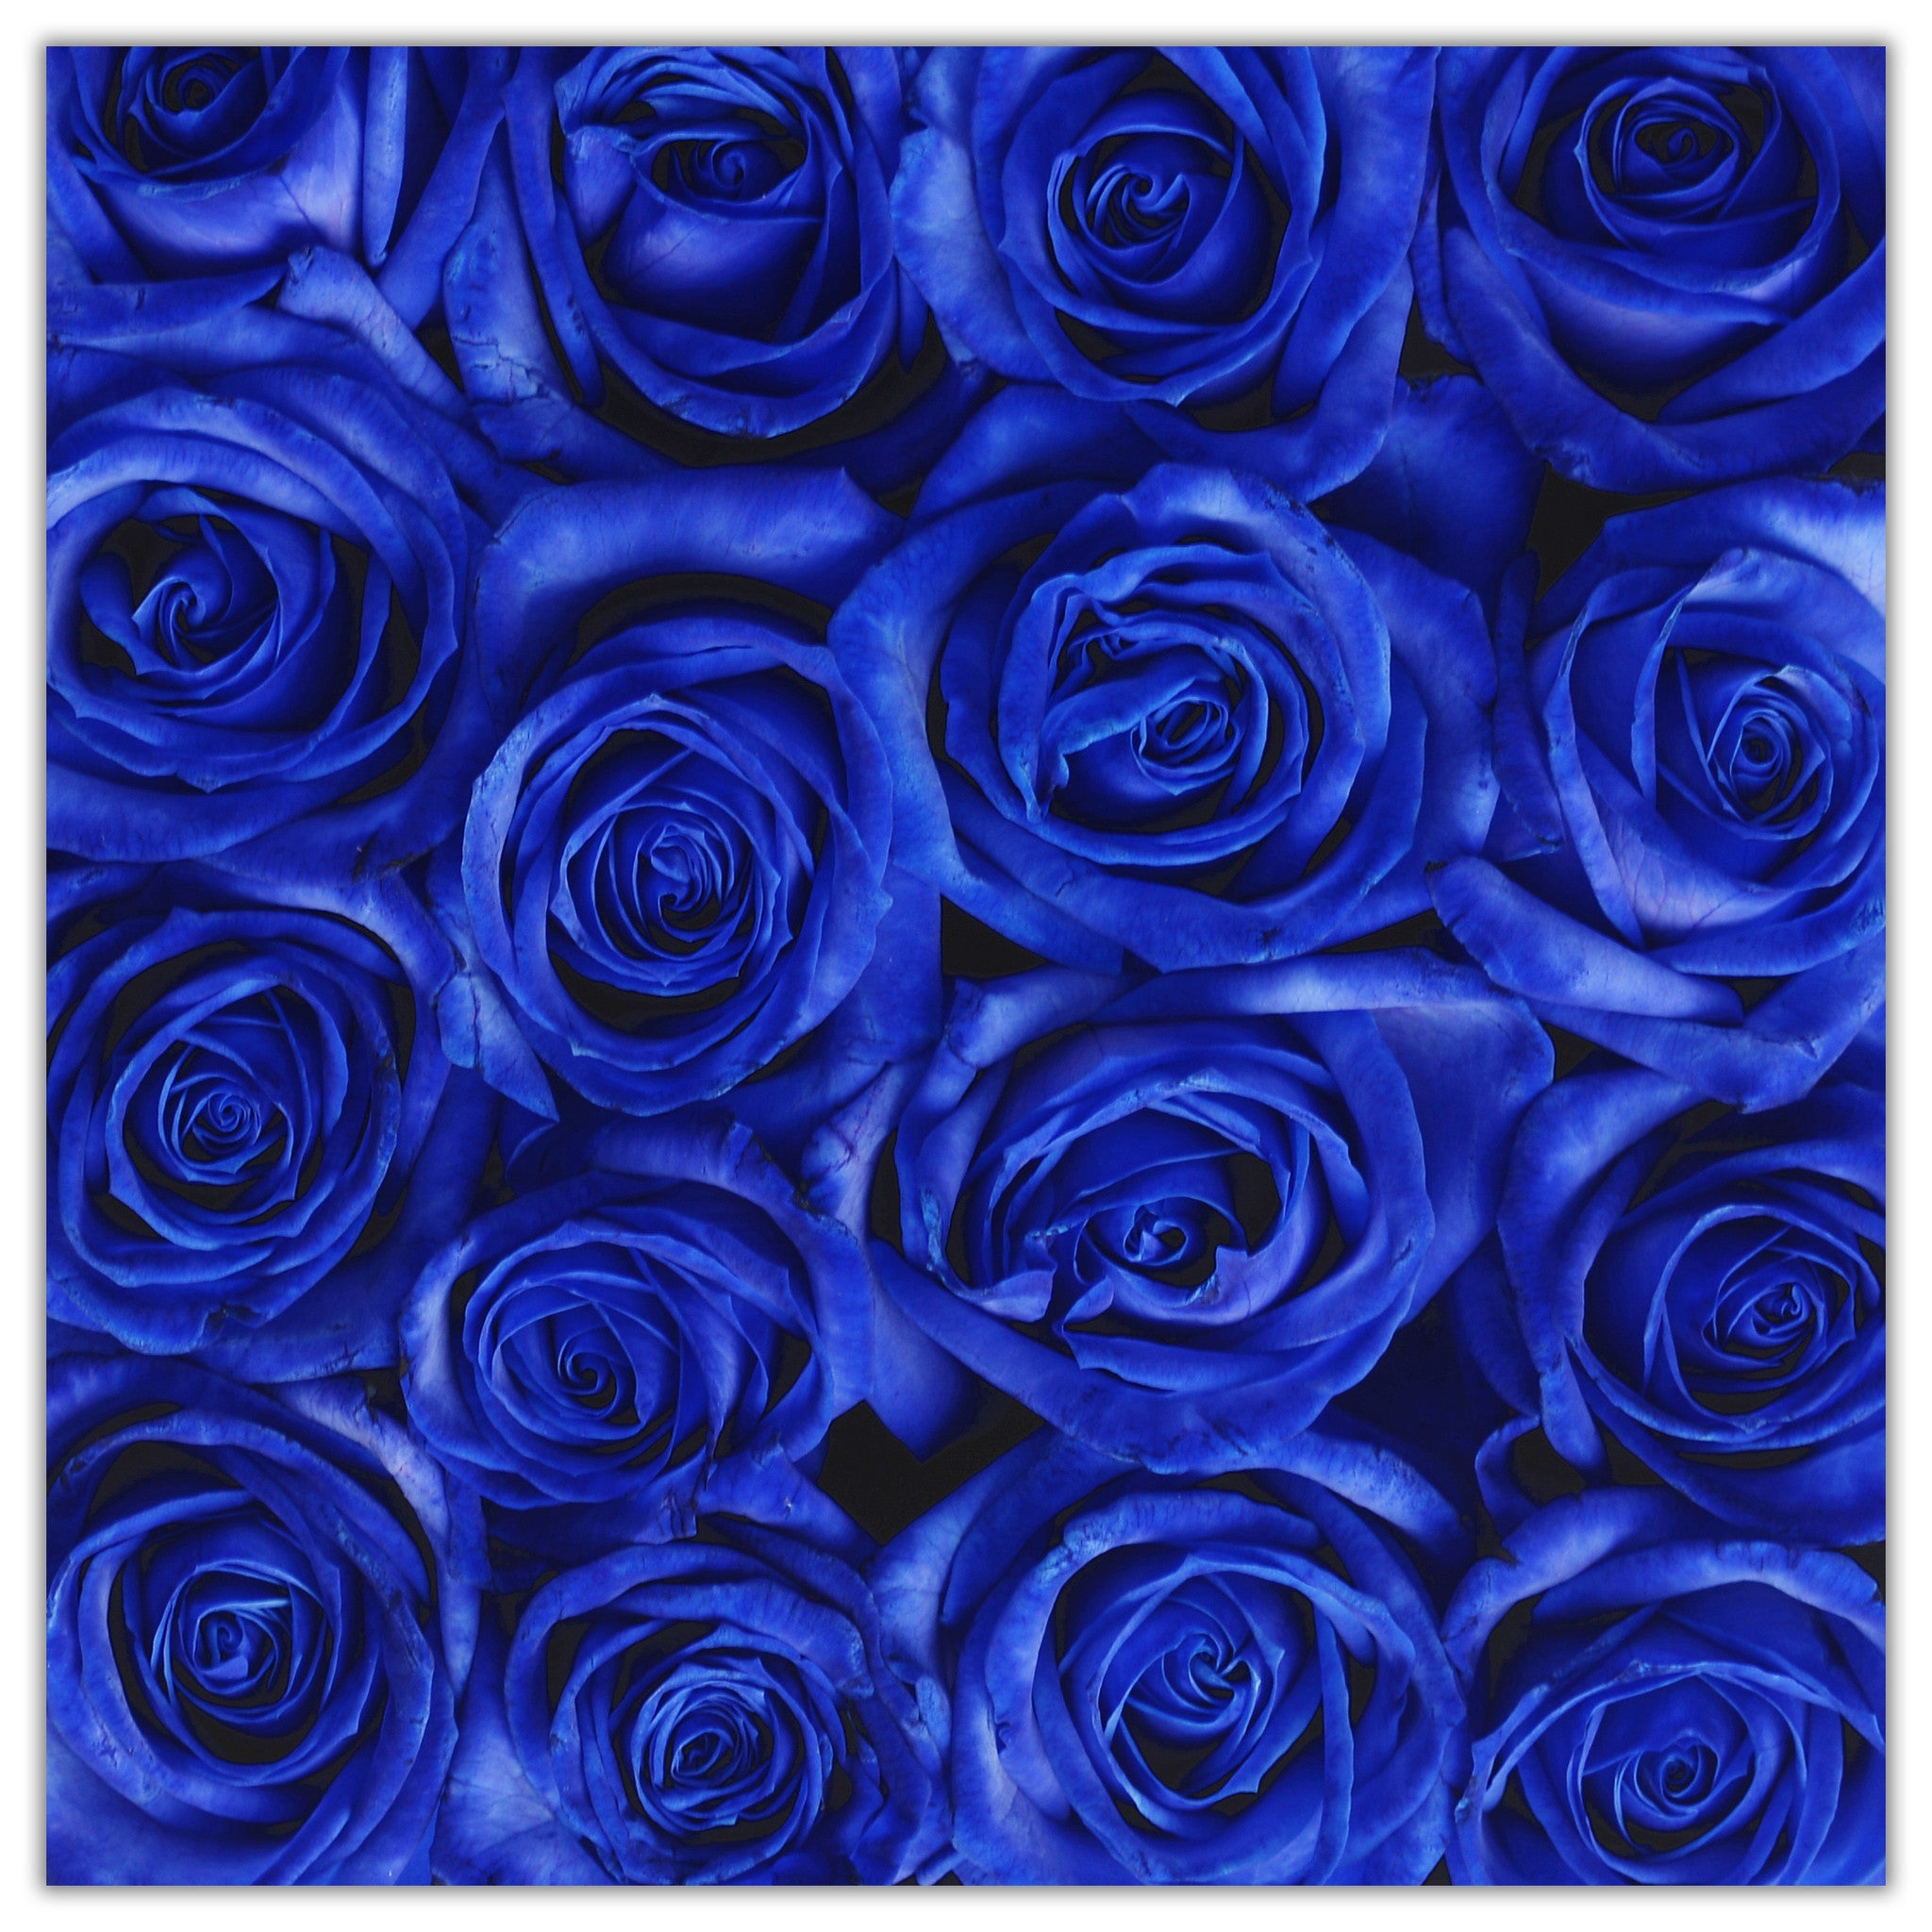 Cube - Blue Roses - White Box - The Million Roses Budapest